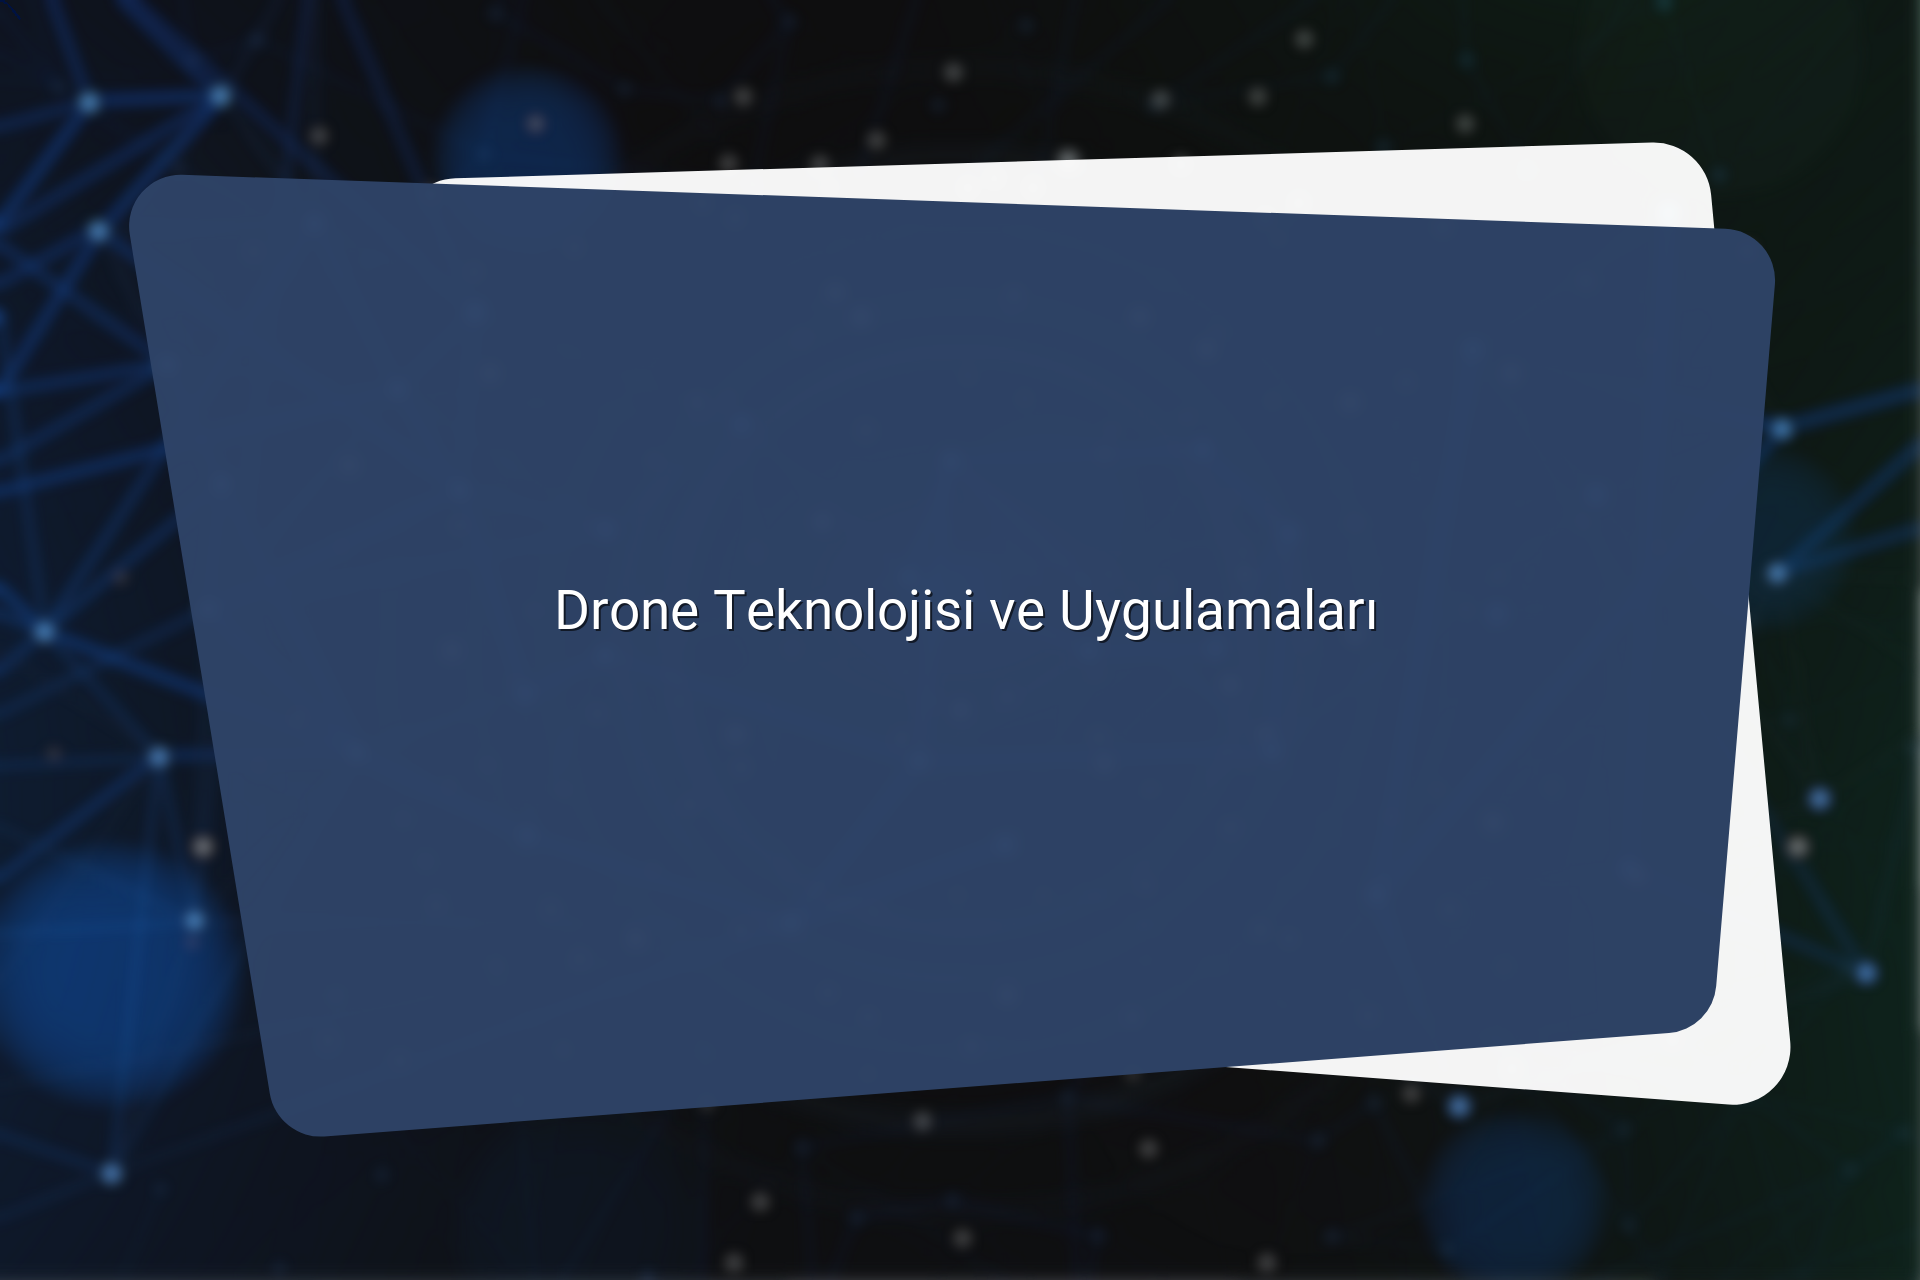 Drone Teknolojisi ve Uygulamalari